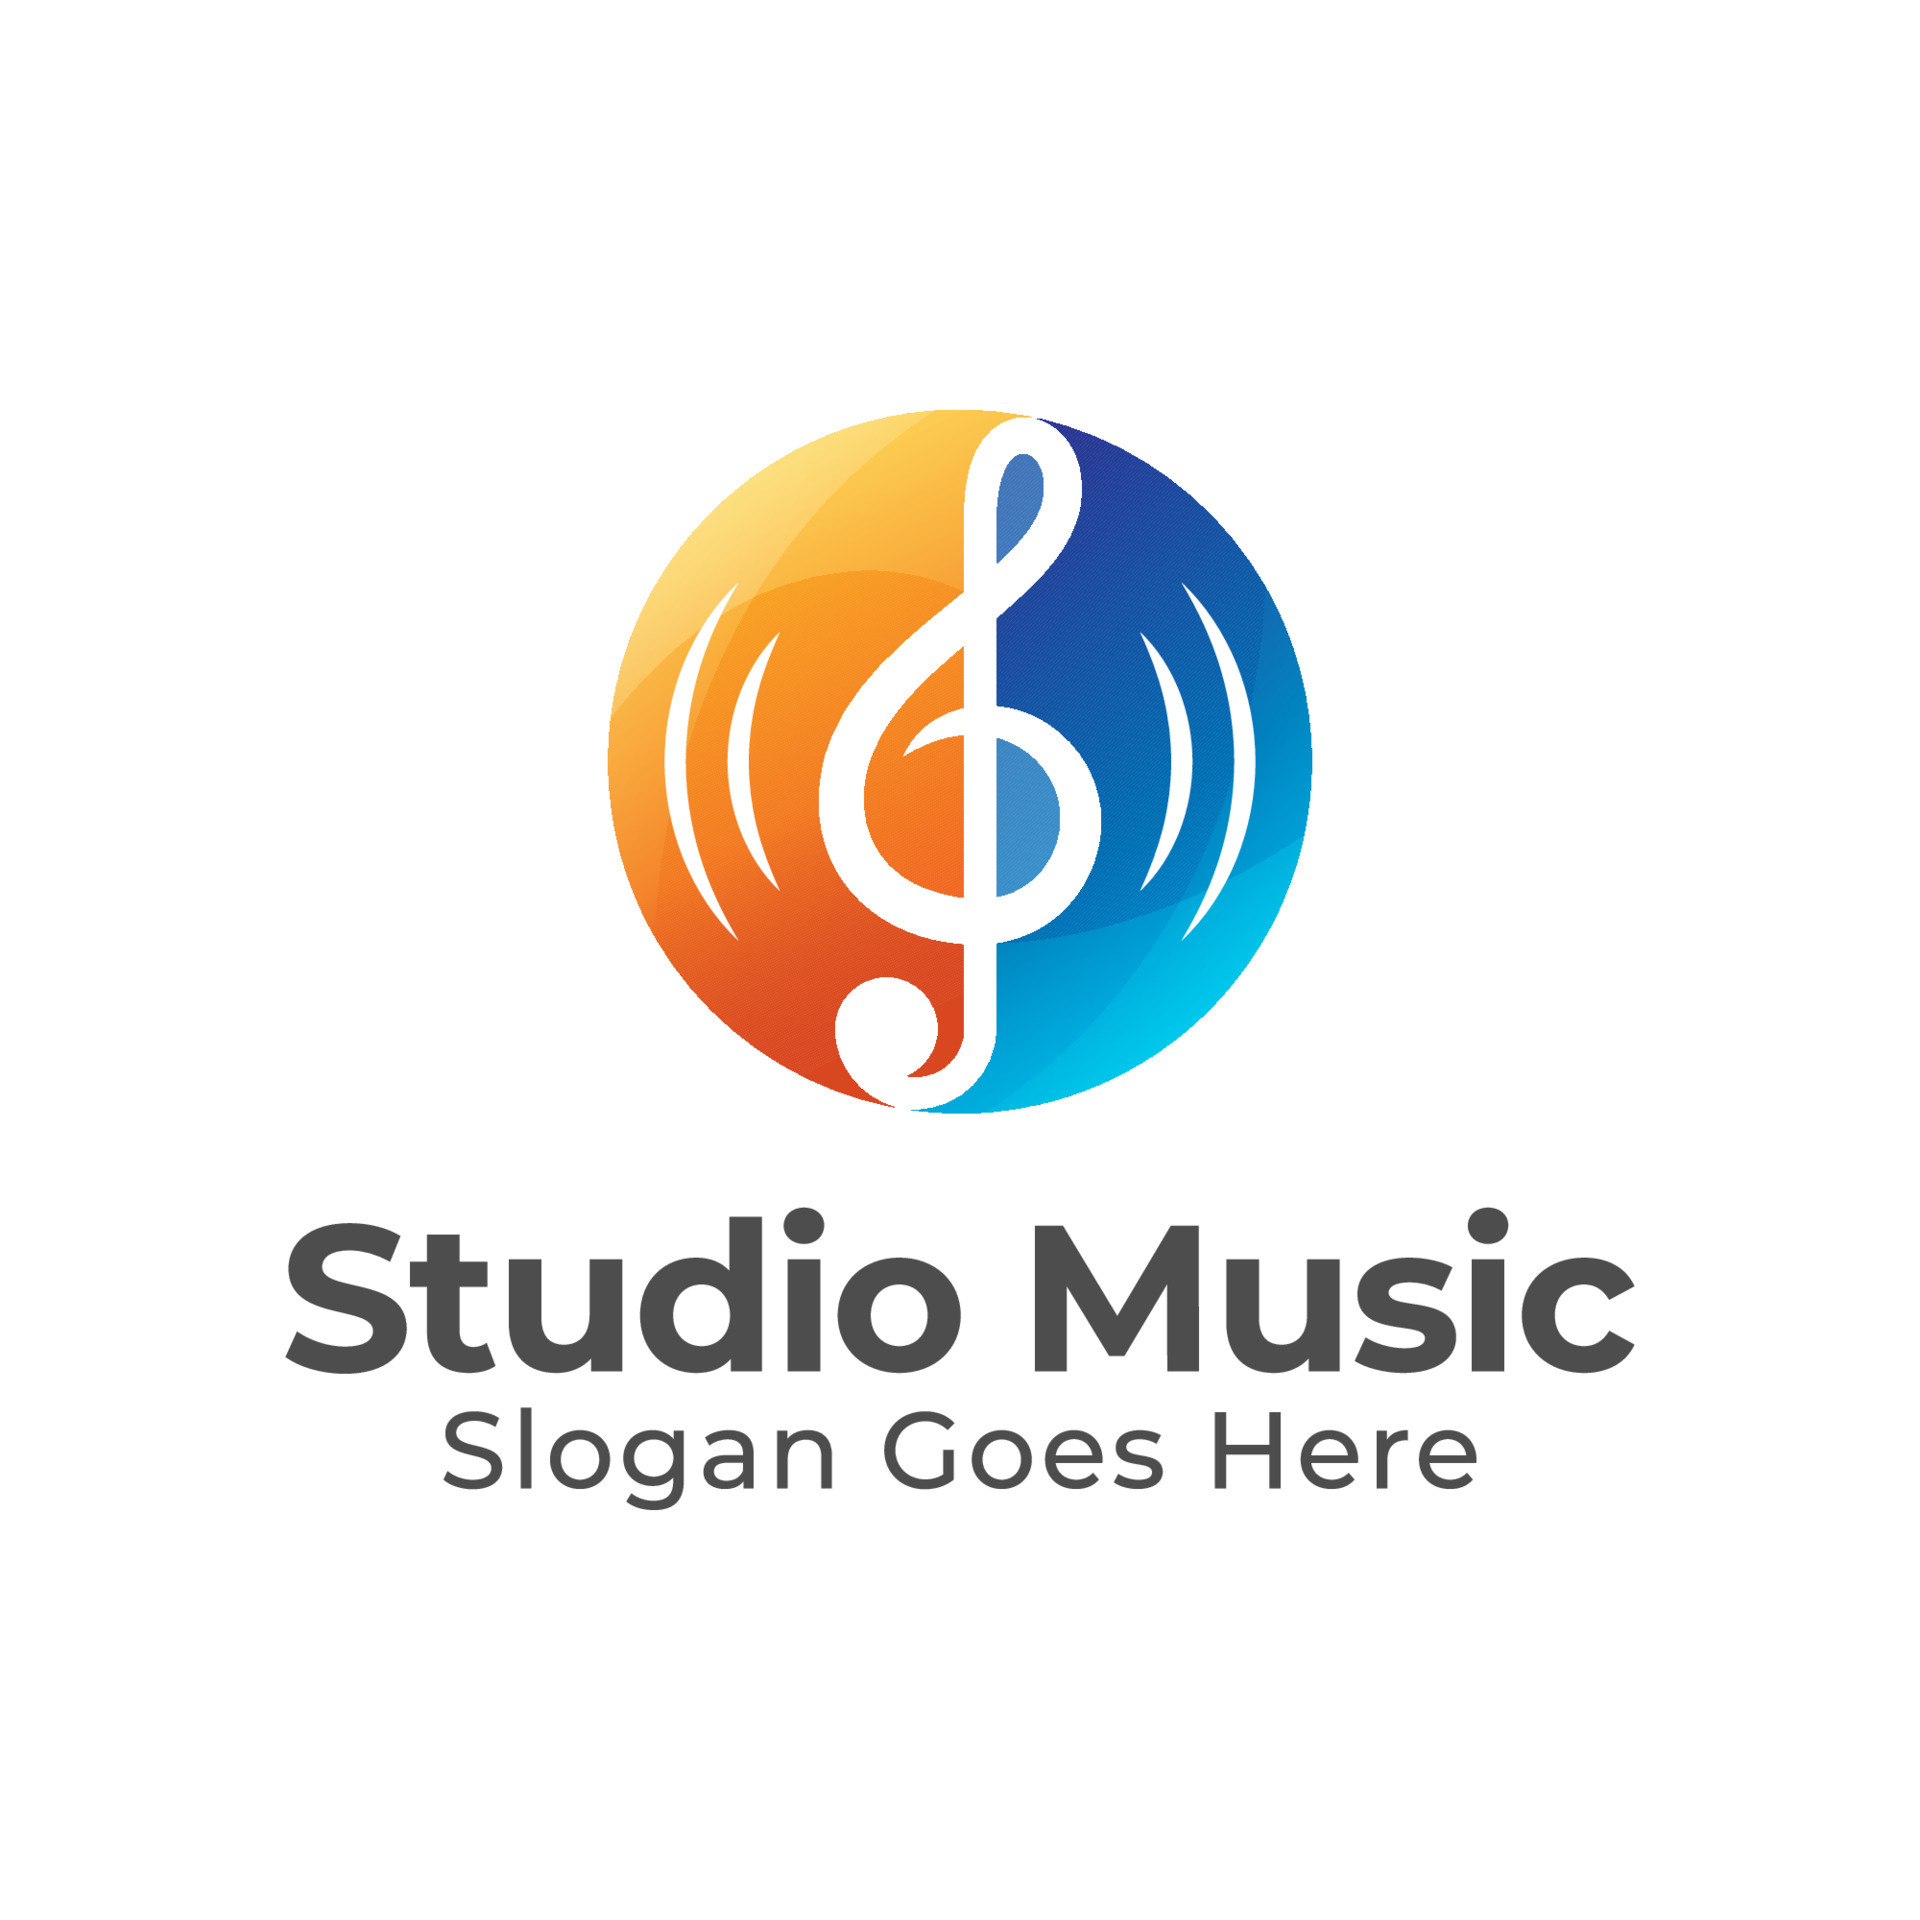 Design Music Logo